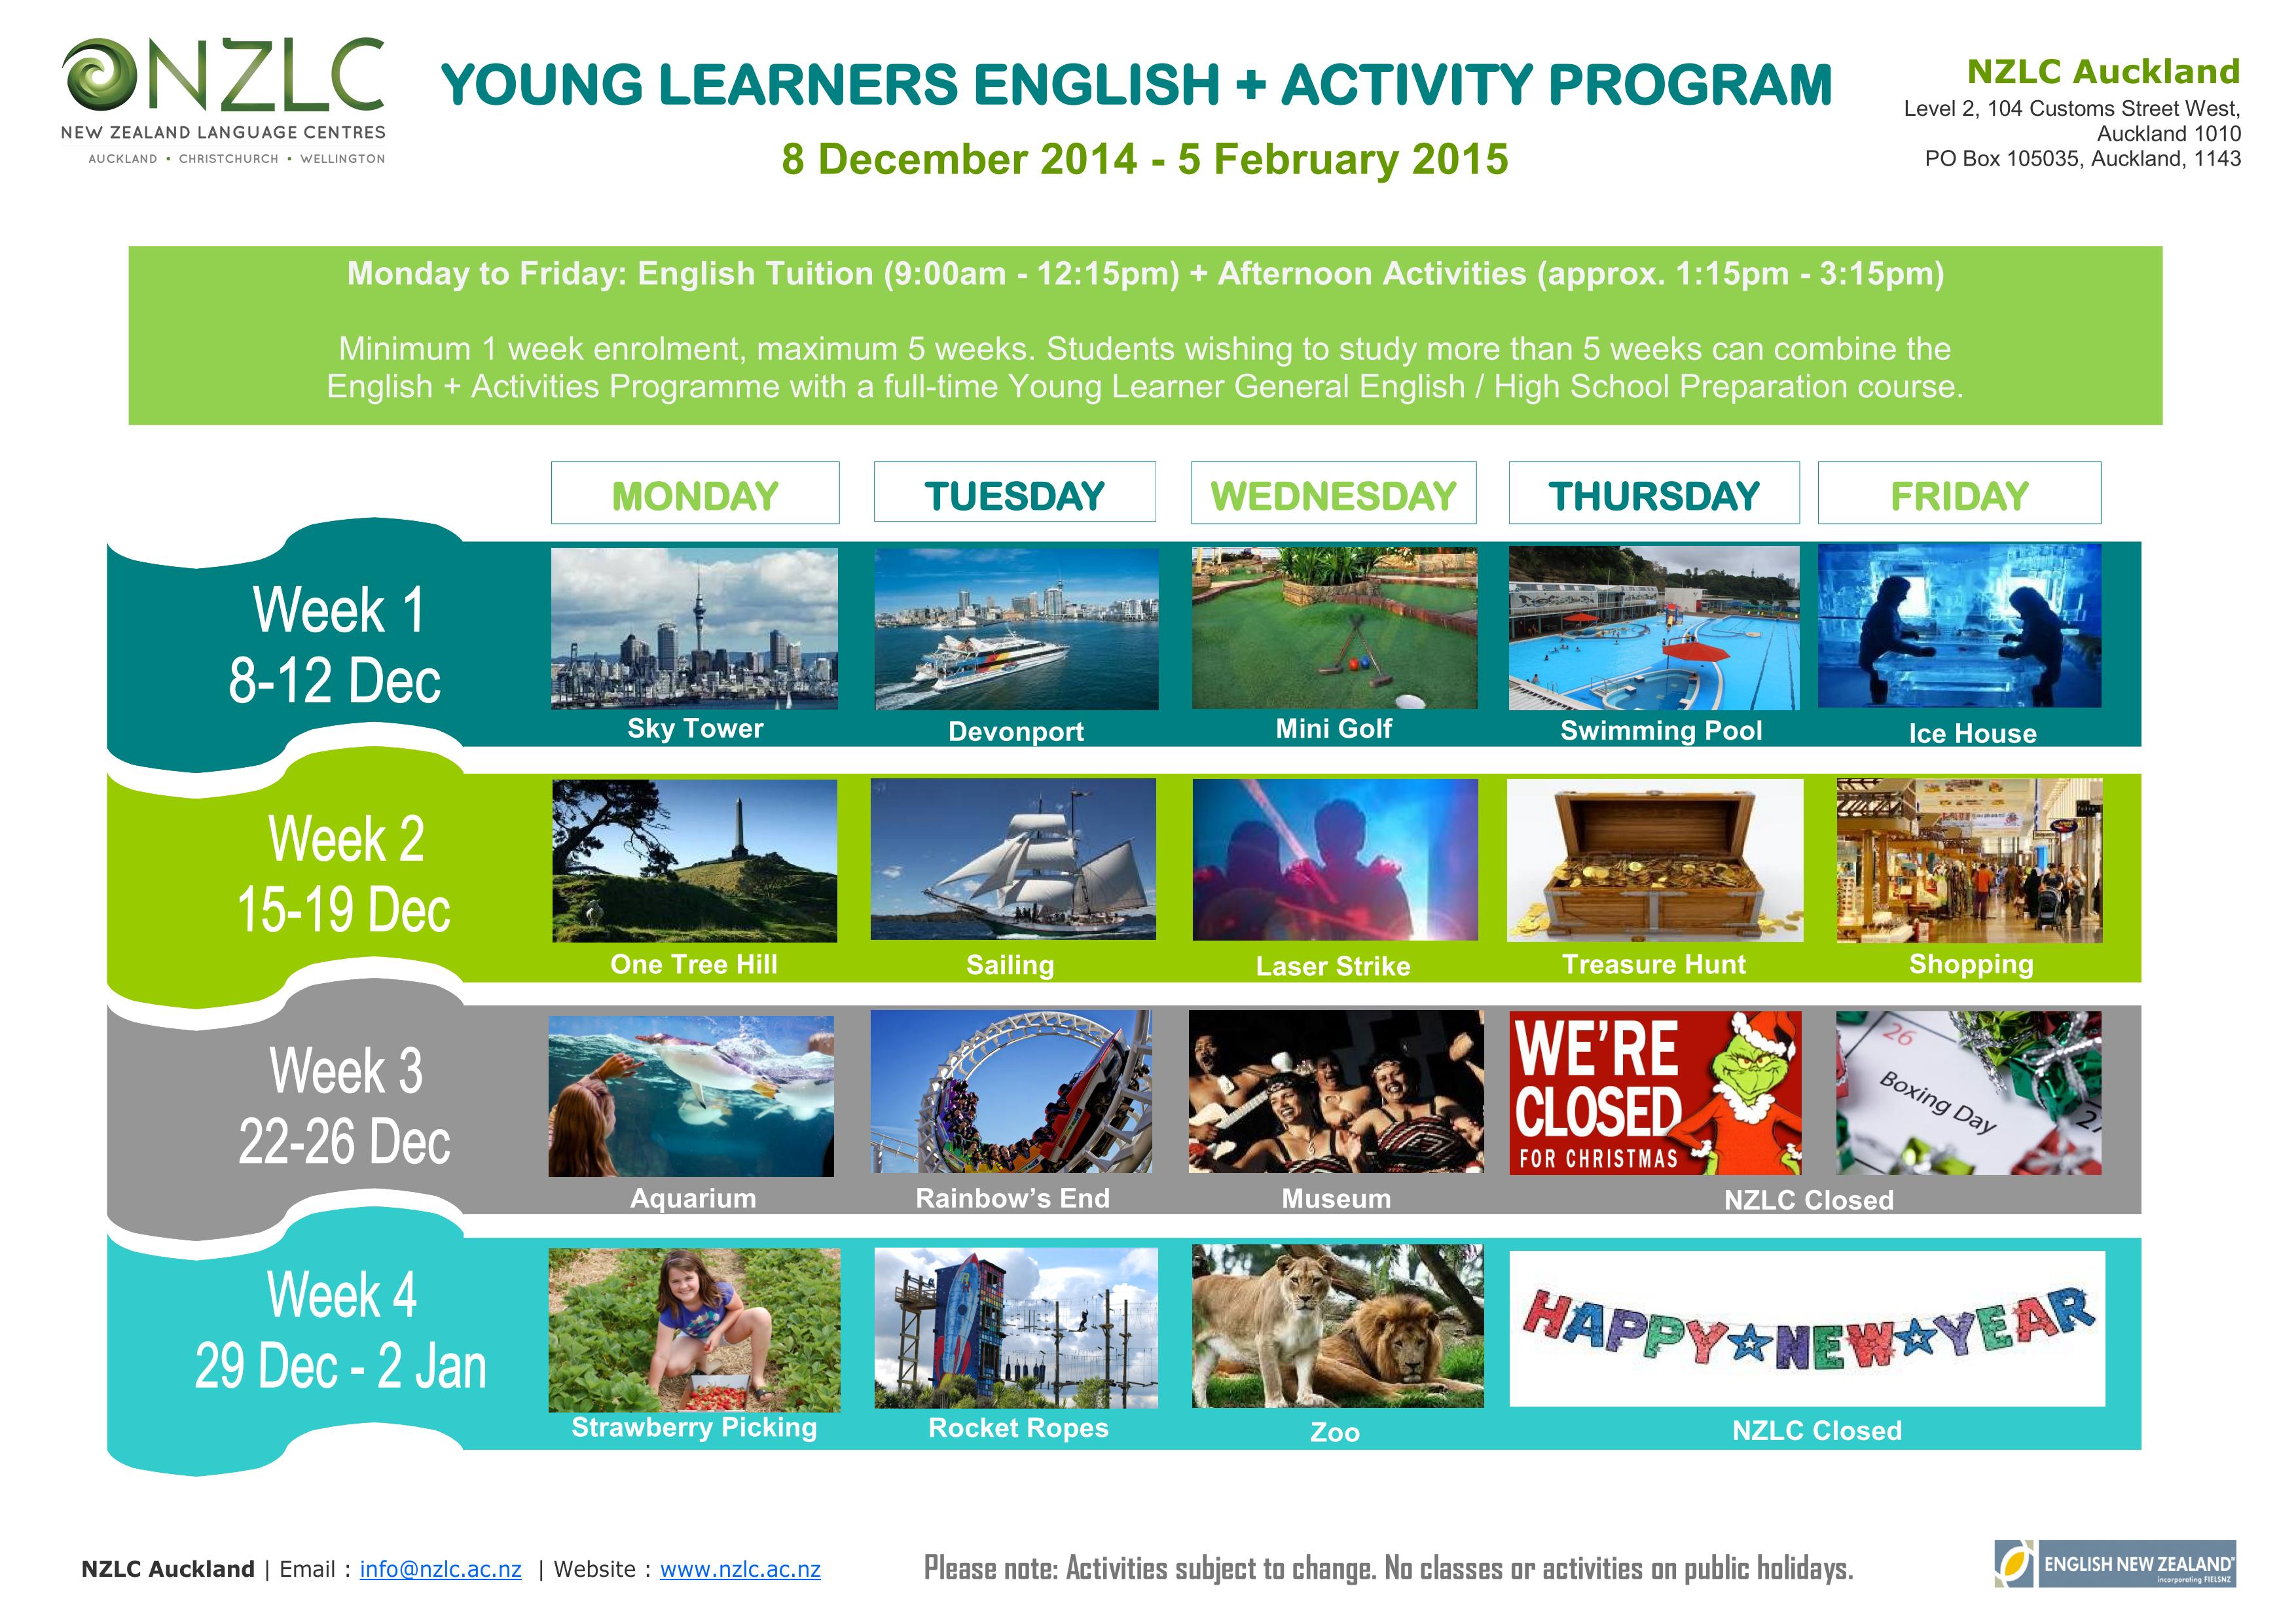 NZLC YL English + Activity Programme Dec 14-Feb 15 v5.080814_01